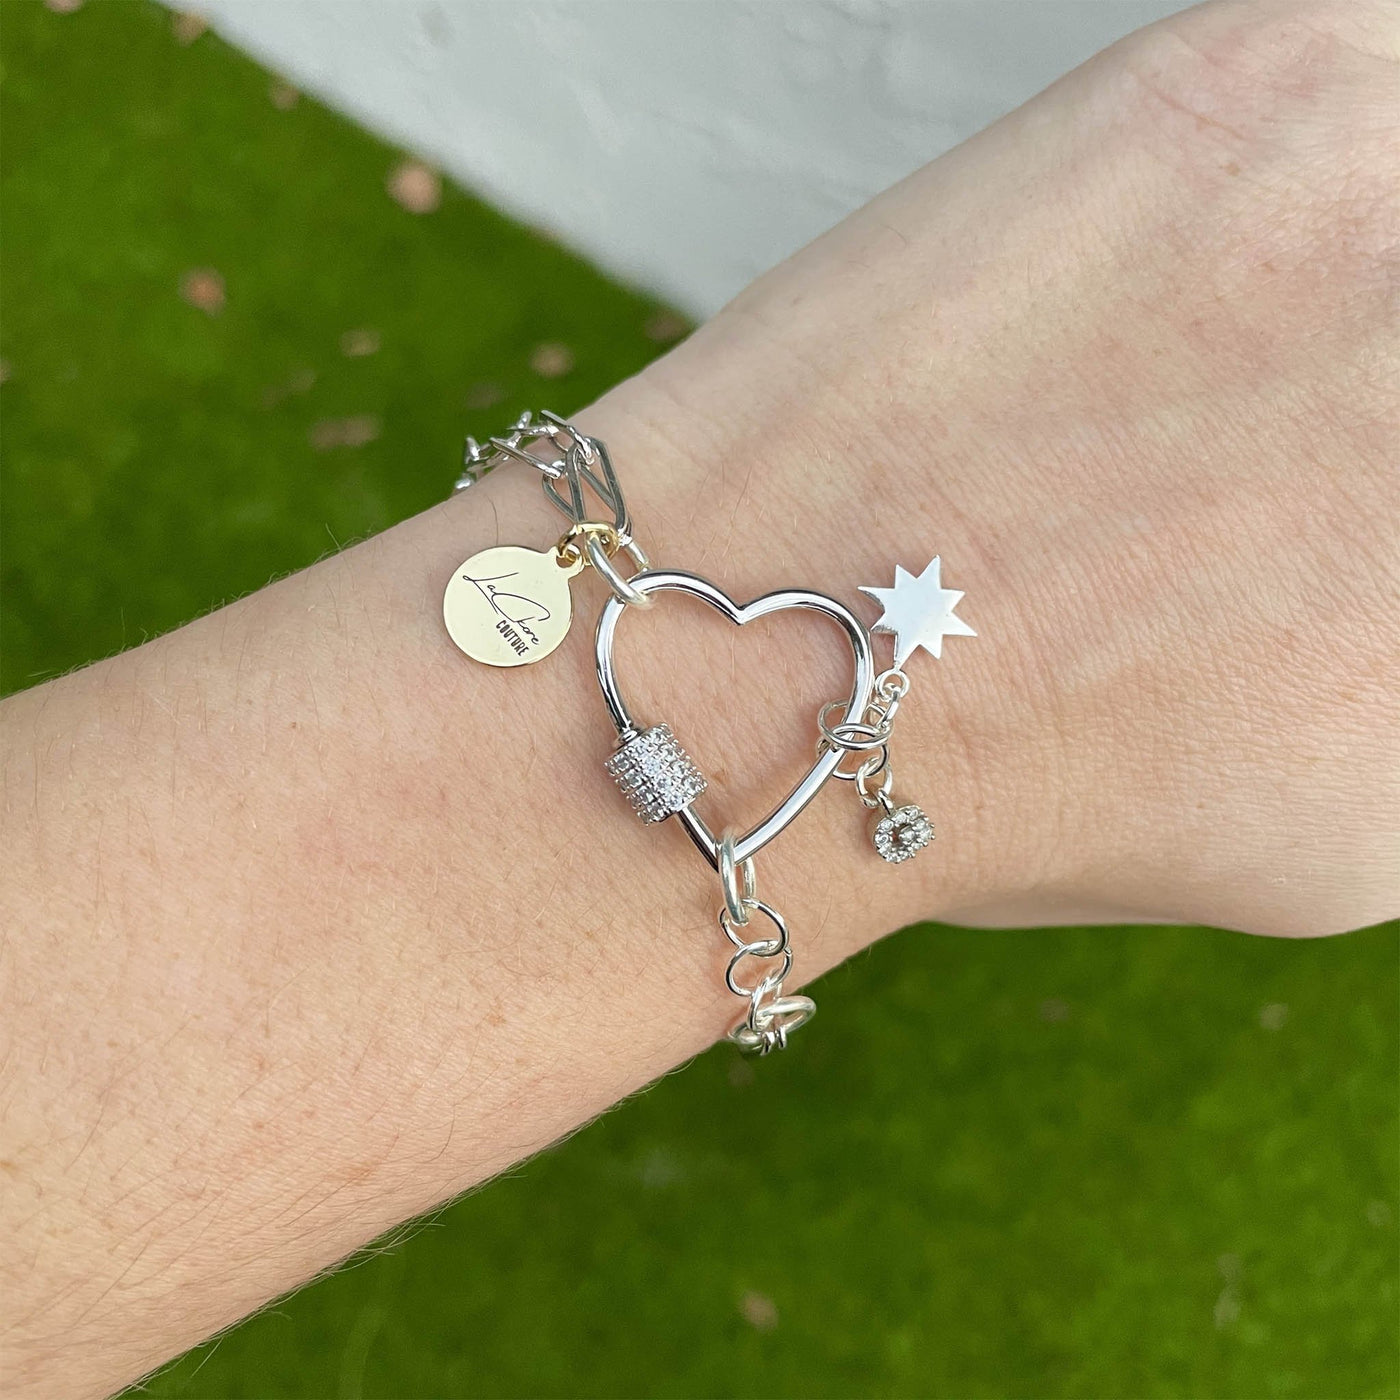 SGACAI Couple Bracelet, With Love Lock, Adjustable Jewelry Bracelet,  Friendship Gift' Q2A8 - Walmart.com